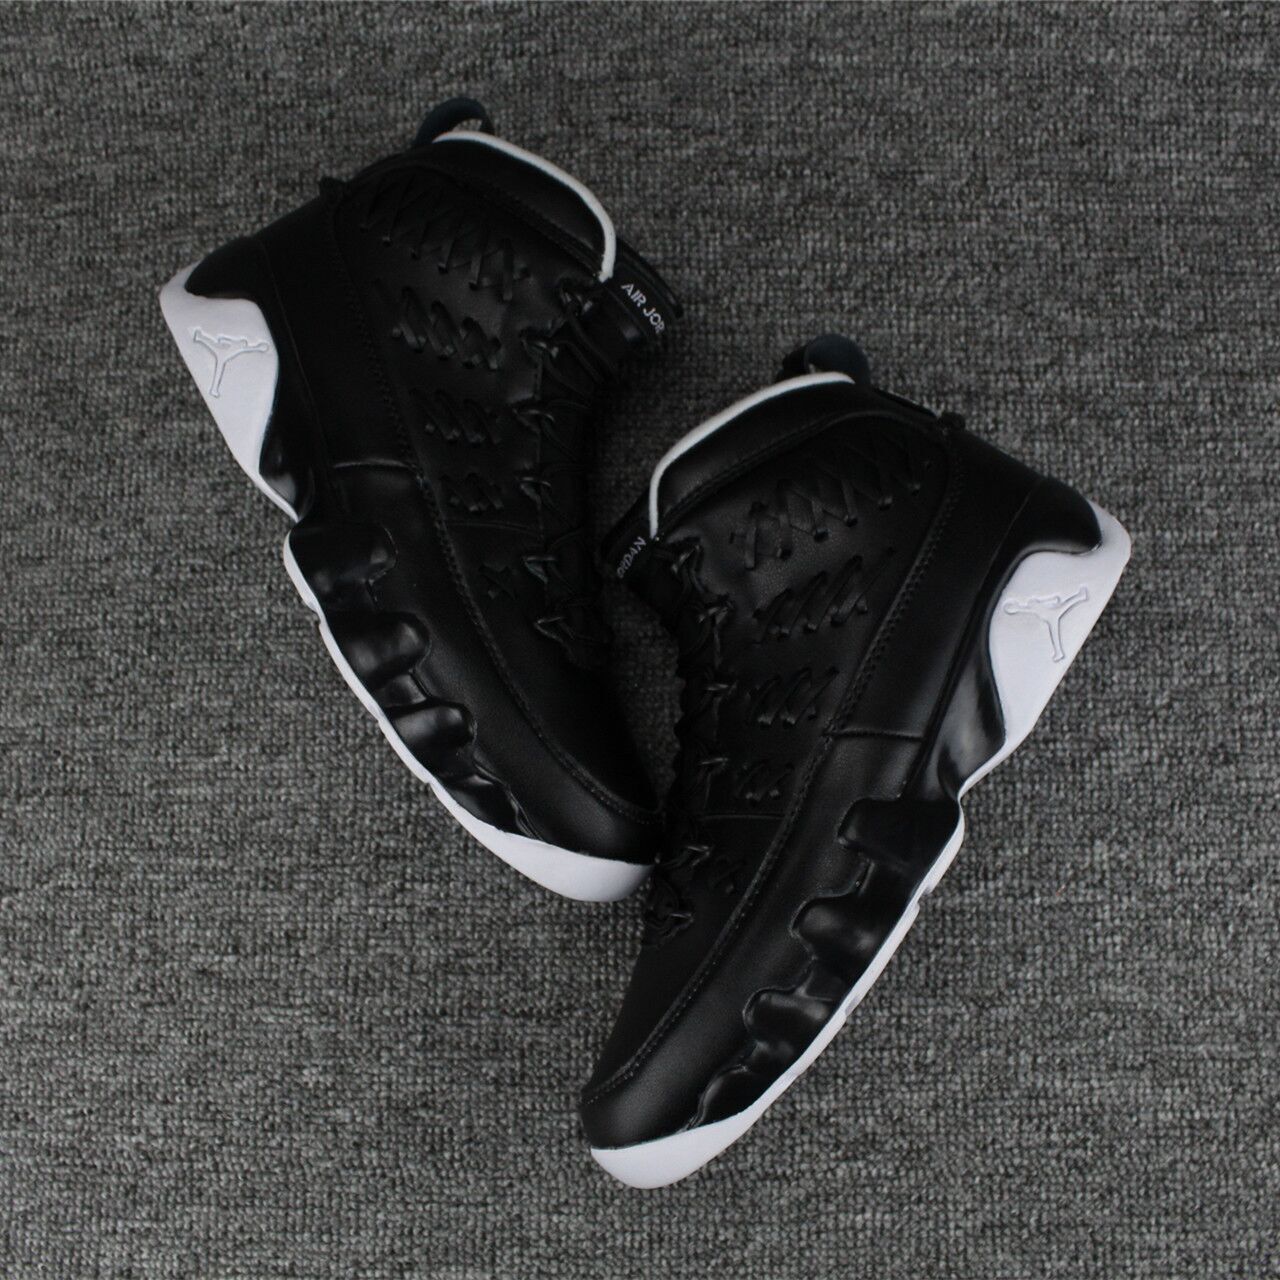 New Air Jordan 9 Knit Black White Shoes